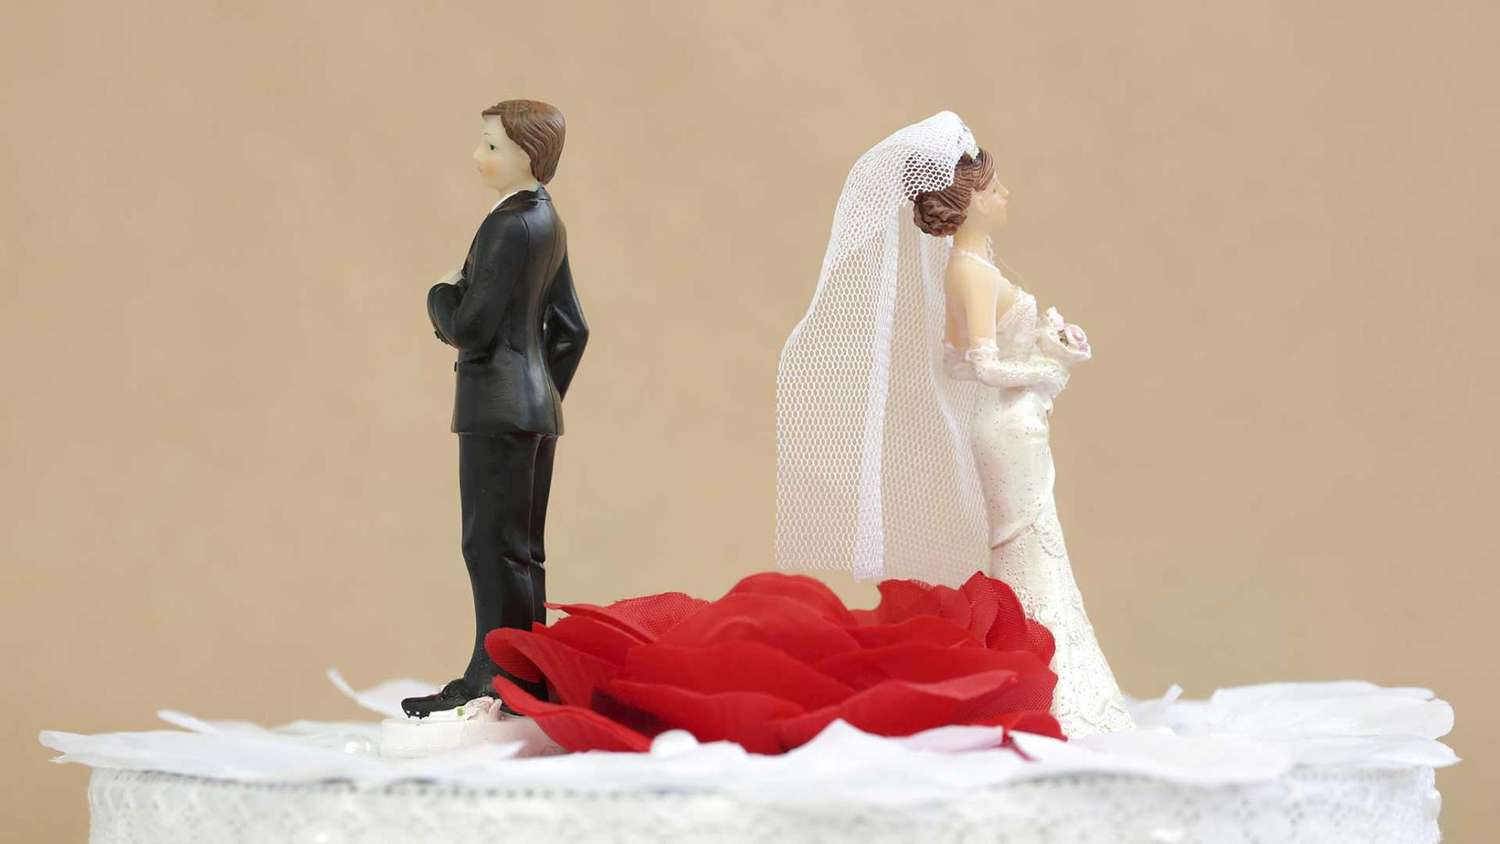 How Long Does a Divorce Take   DivorceWriter